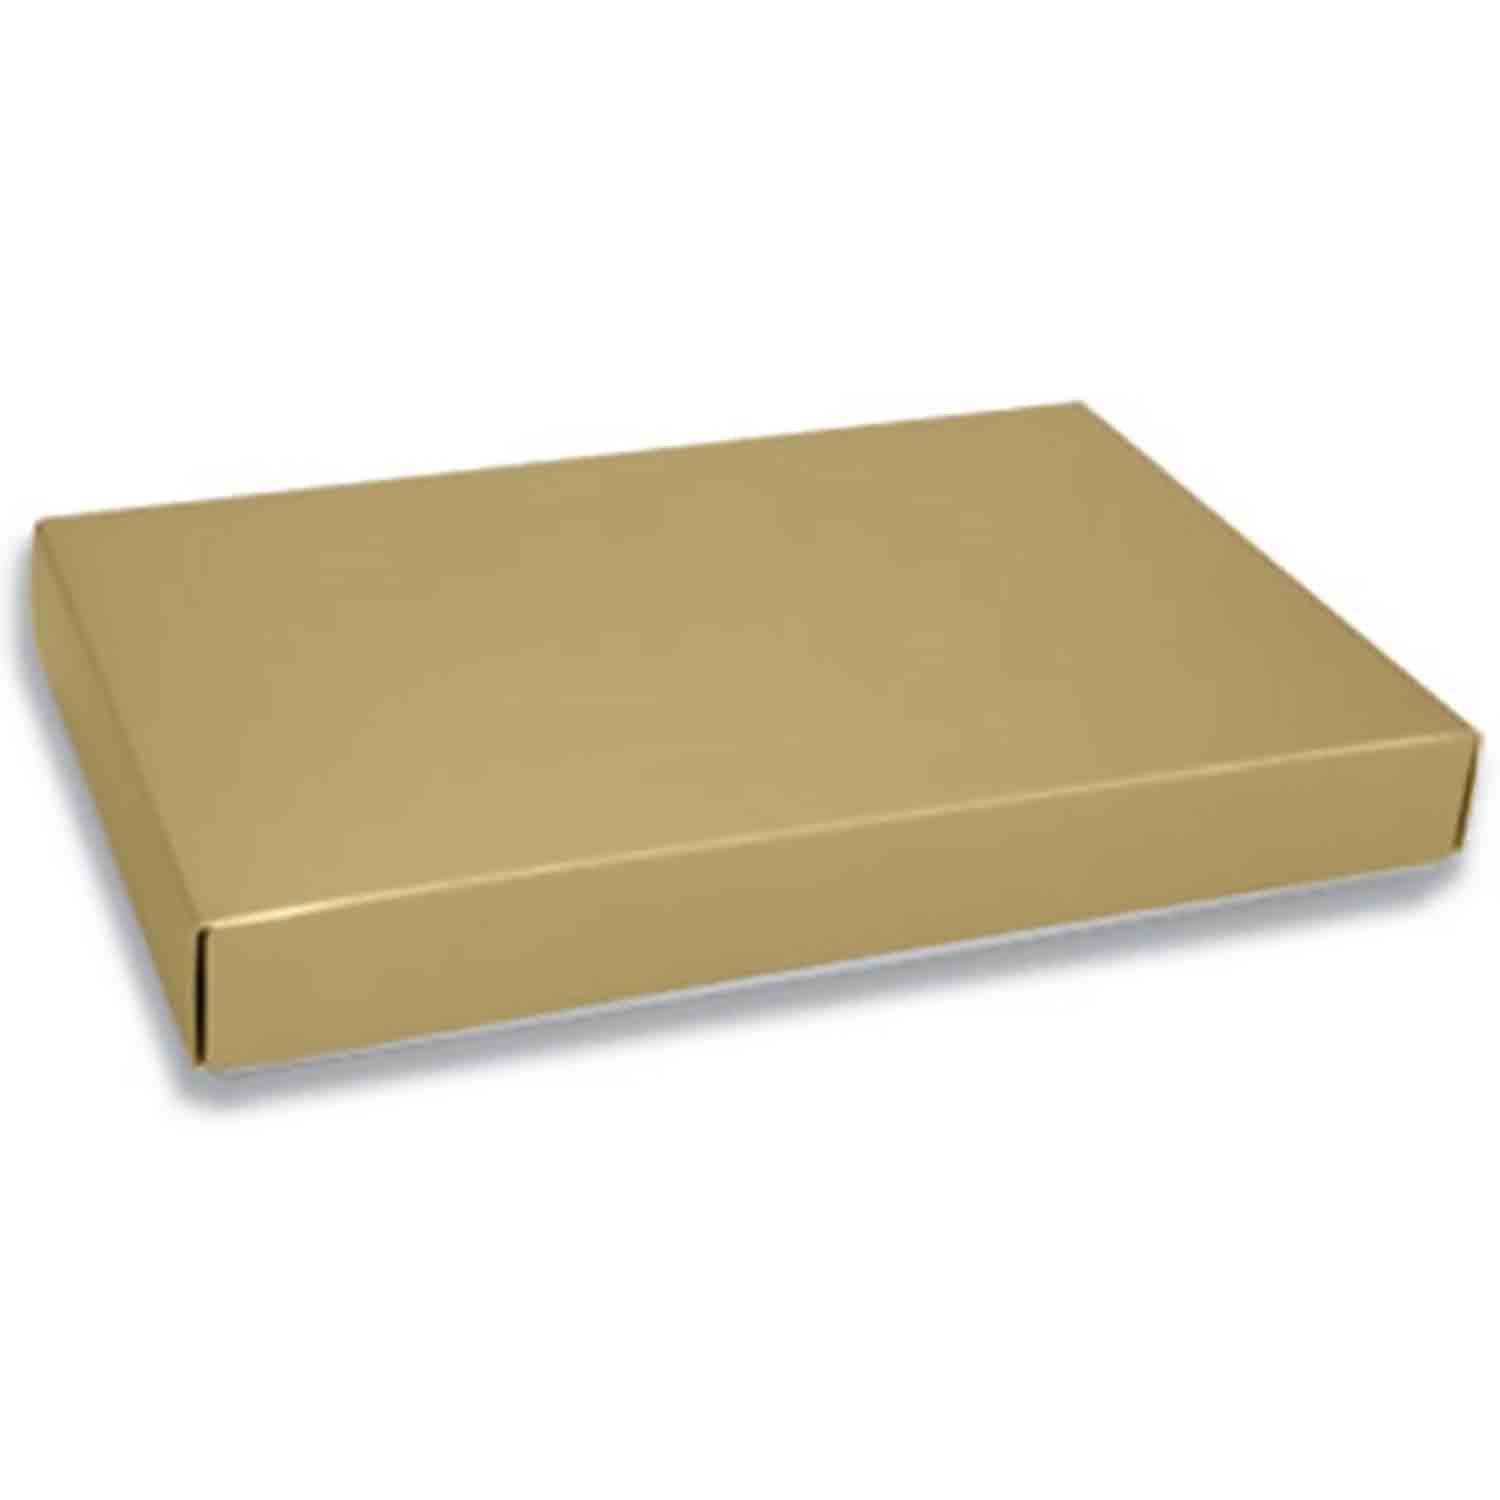 1 lb Gold Candy Box - 2 pc